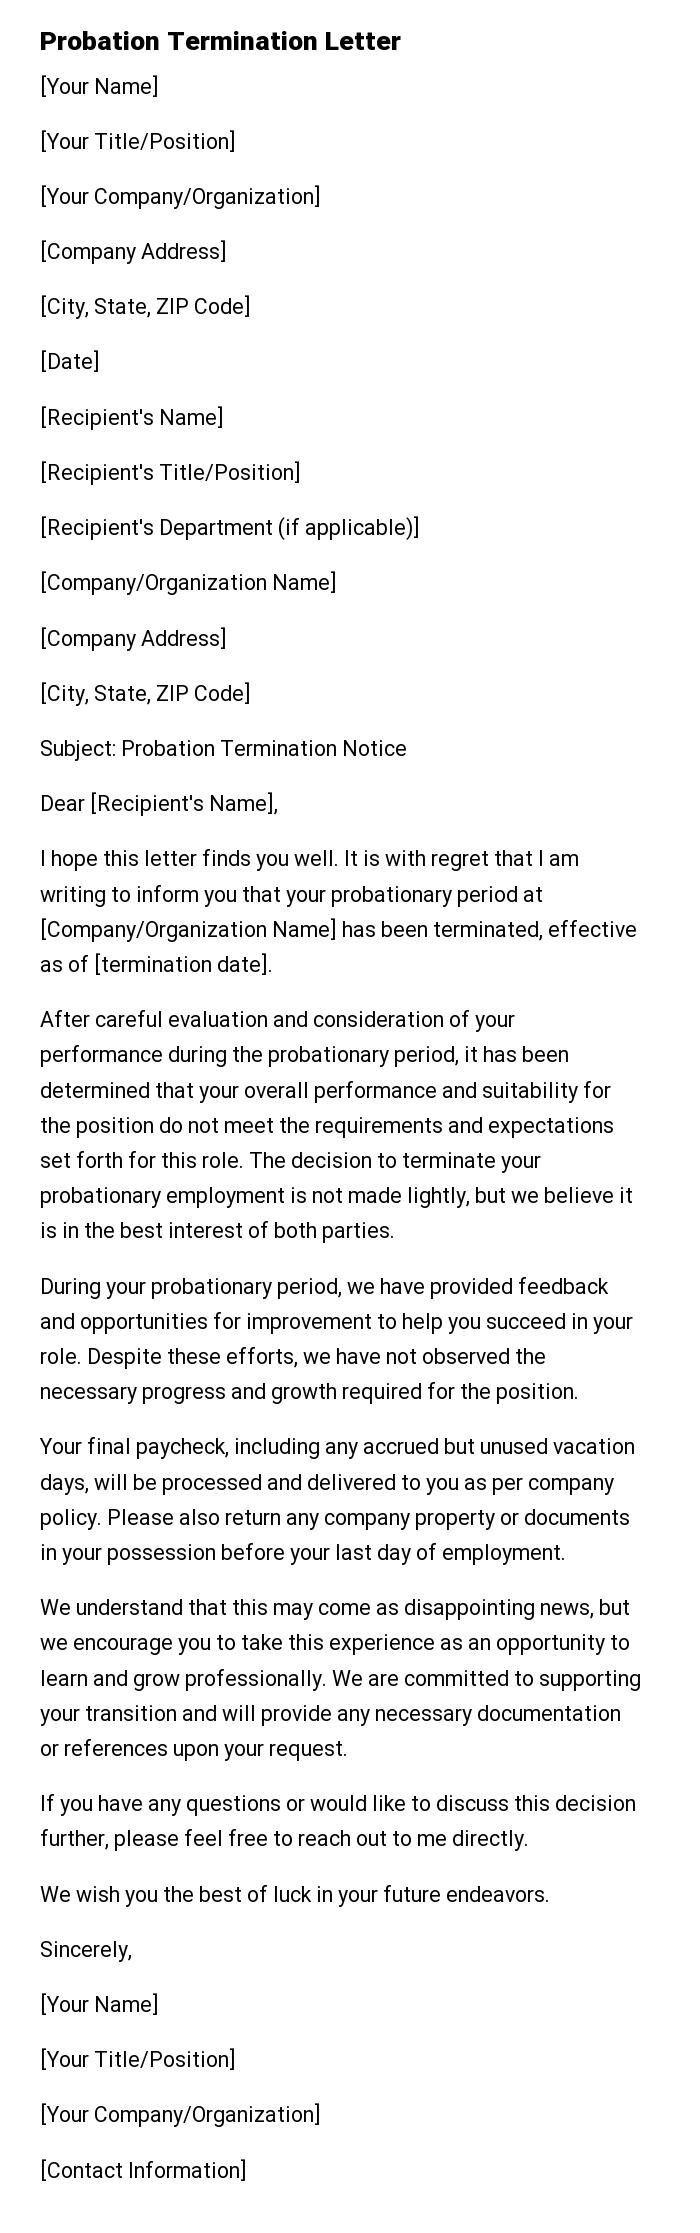 Probation Termination Letter